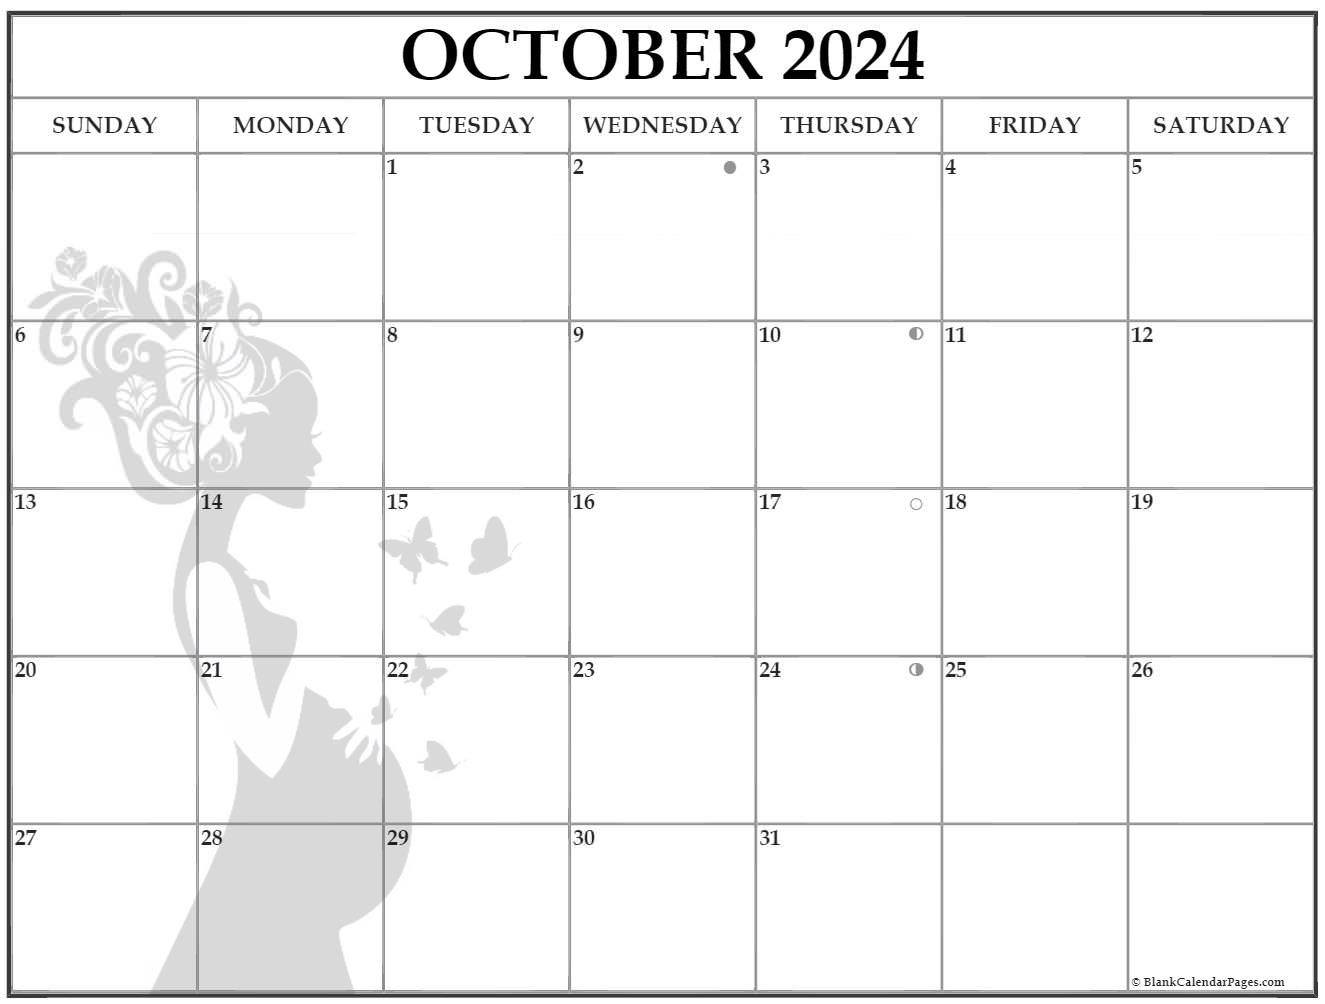 October 2020 Pregnancy Calendar